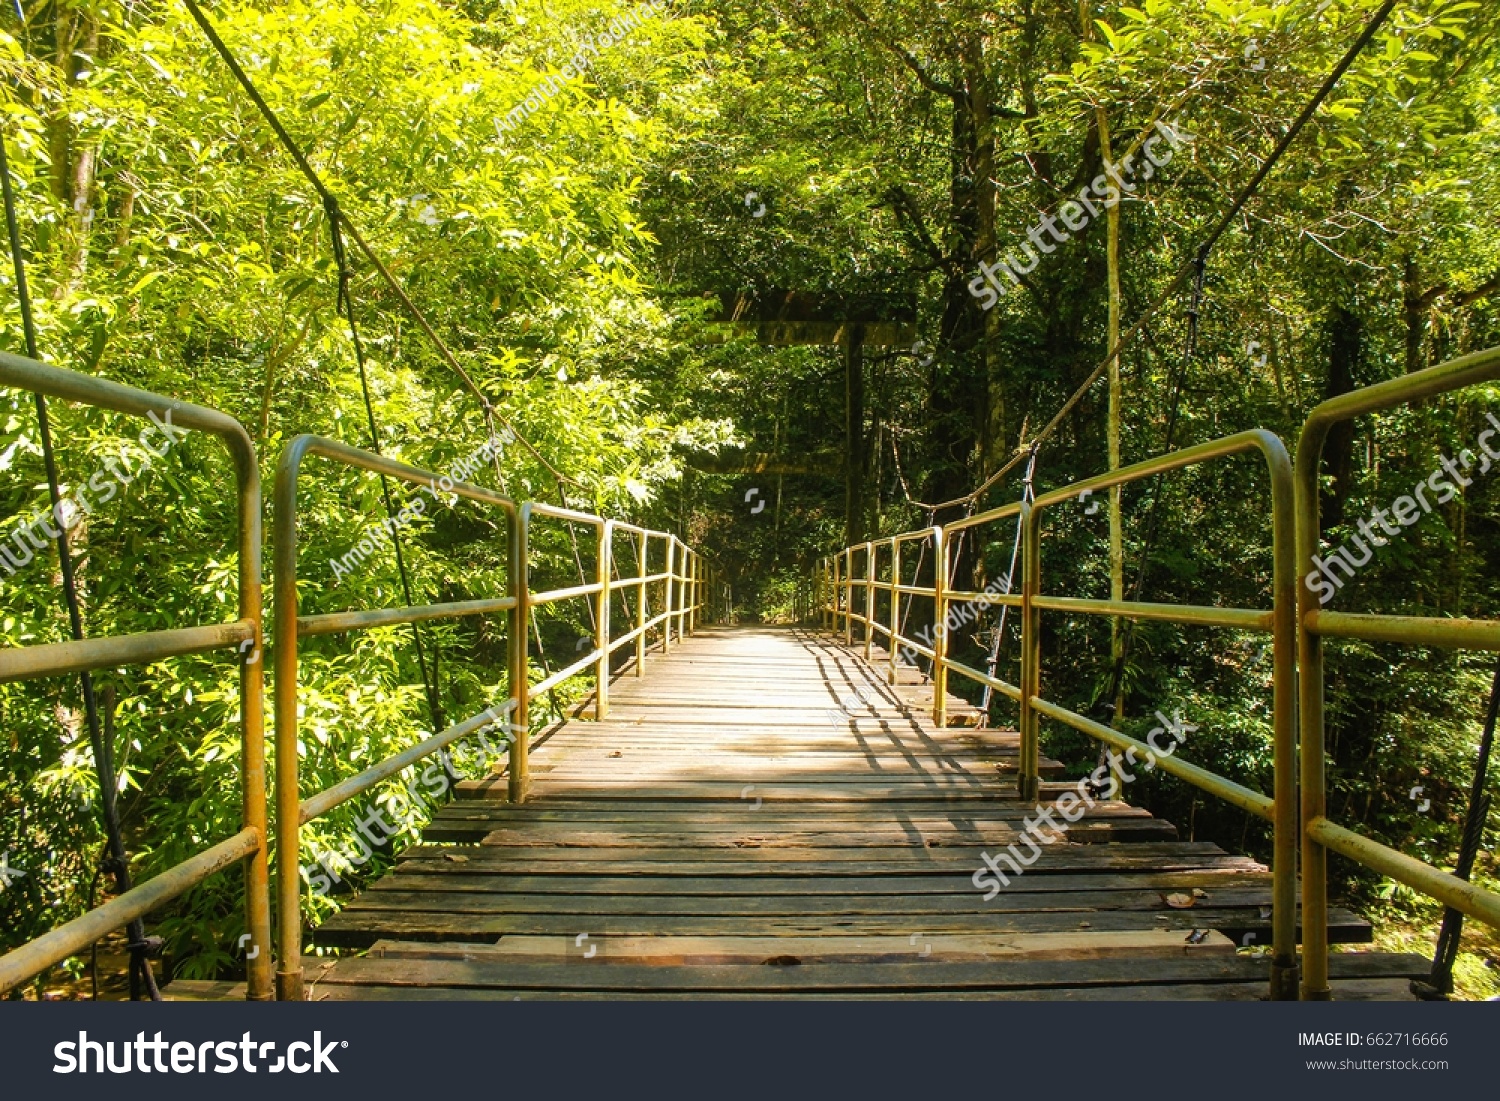 Suspension bridge, Crossing the river, ferriage in the woods #662716666